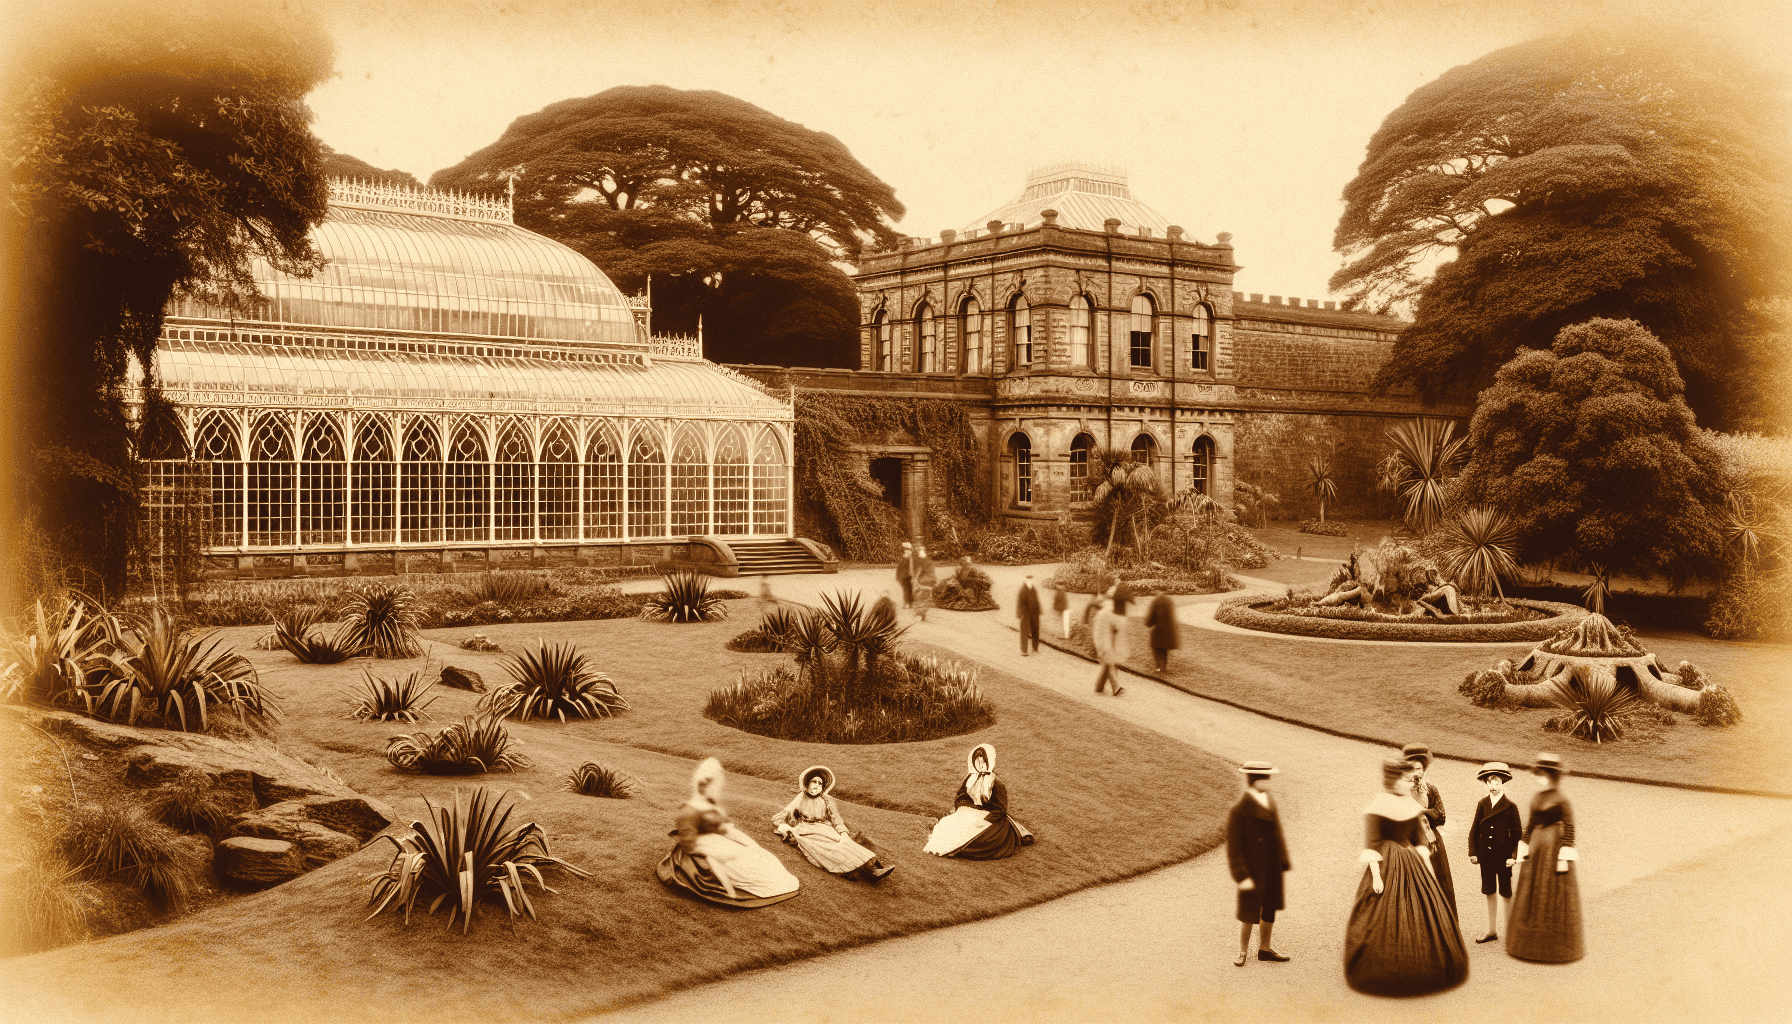 Belfast Botanic Gardens' rich history